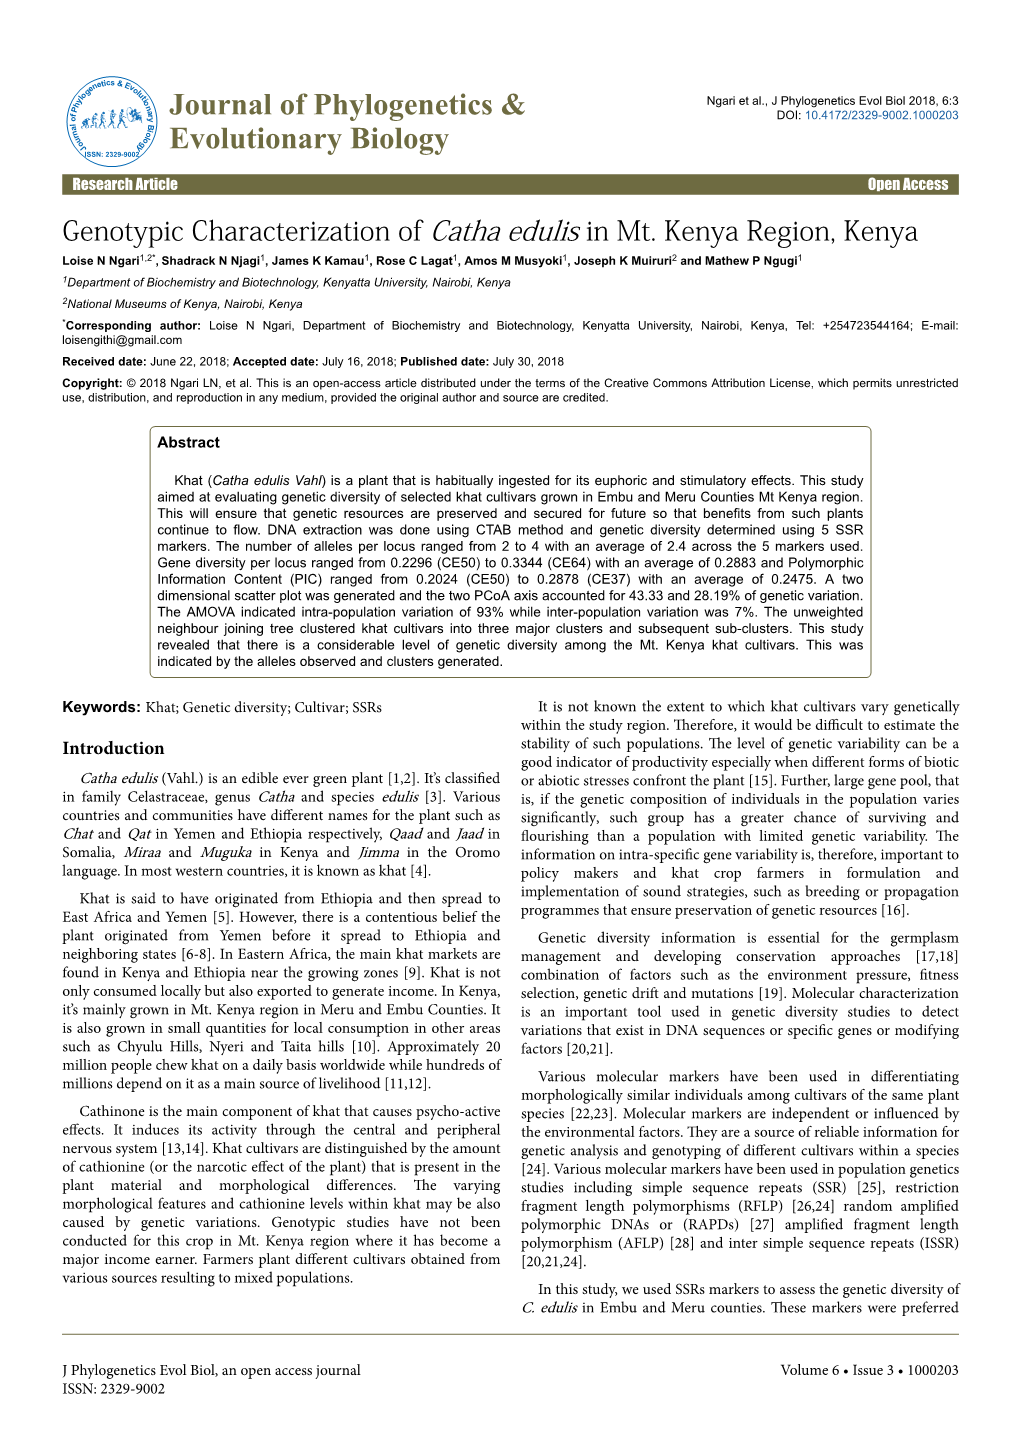 Genotypic Characterization of Catha Edulis in Mt. Kenya Region, Kenya